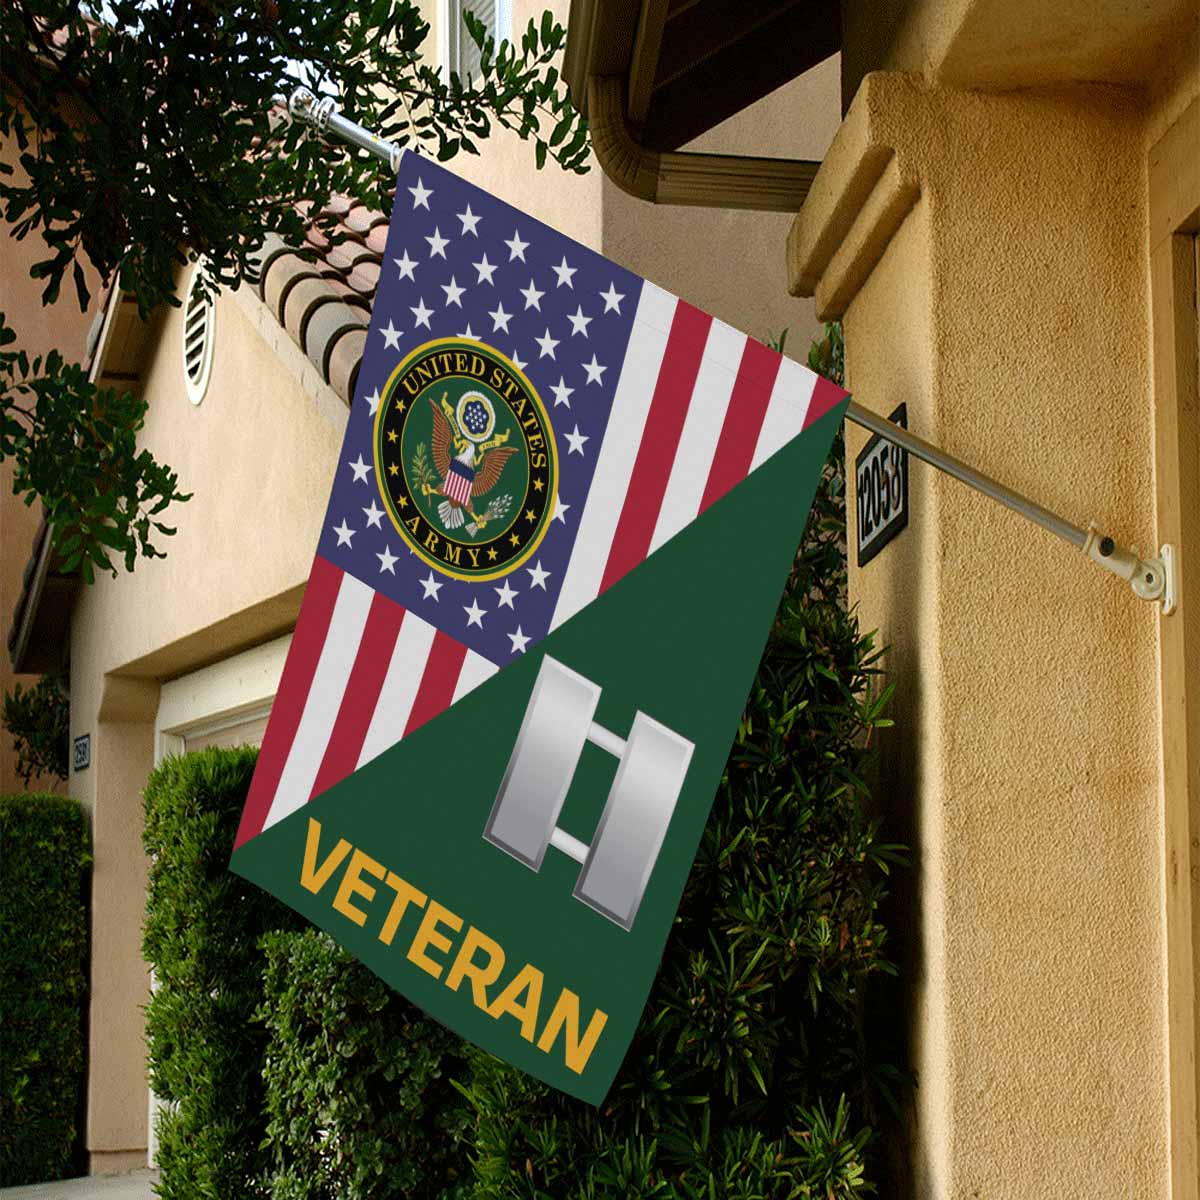 US Army O-3 Captain O3 CPT Veteran House Flag 28 Inch x 40 Inch 2-Side Printing-HouseFlag-Army-Ranks-Veterans Nation